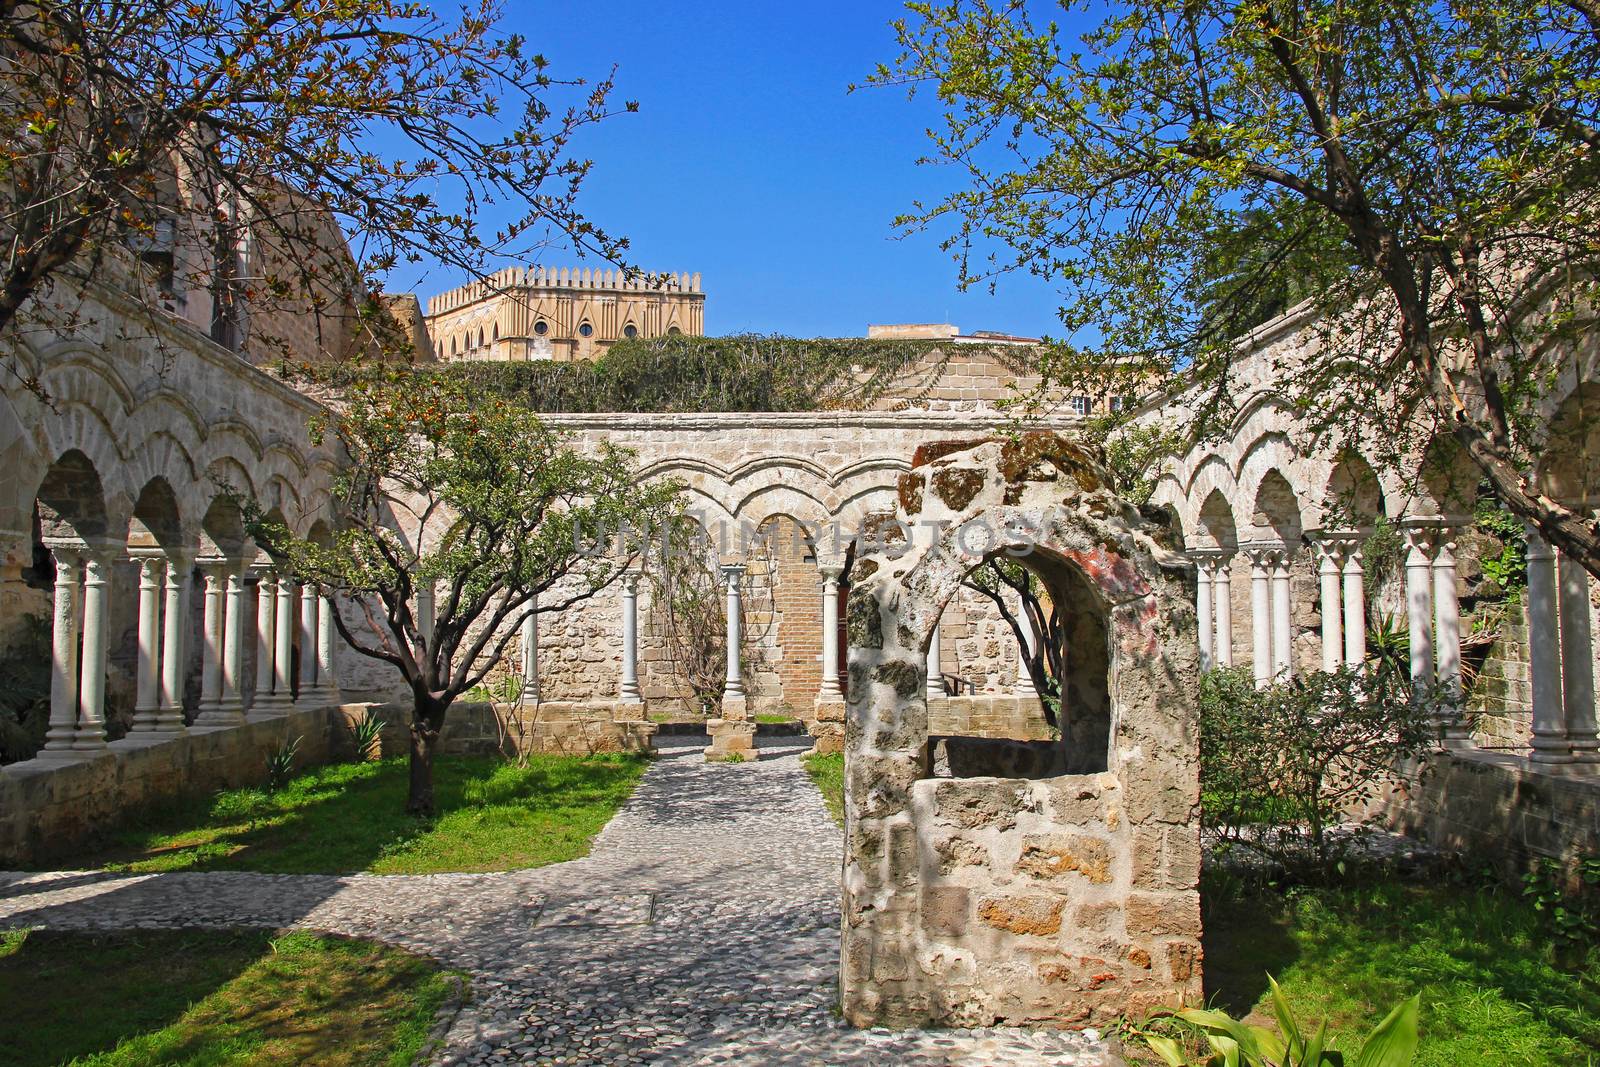 Italy. Sicily island. Palermo city. The monastery courtyard (cloister) of San Giovanni degli Eremiti Church in spring